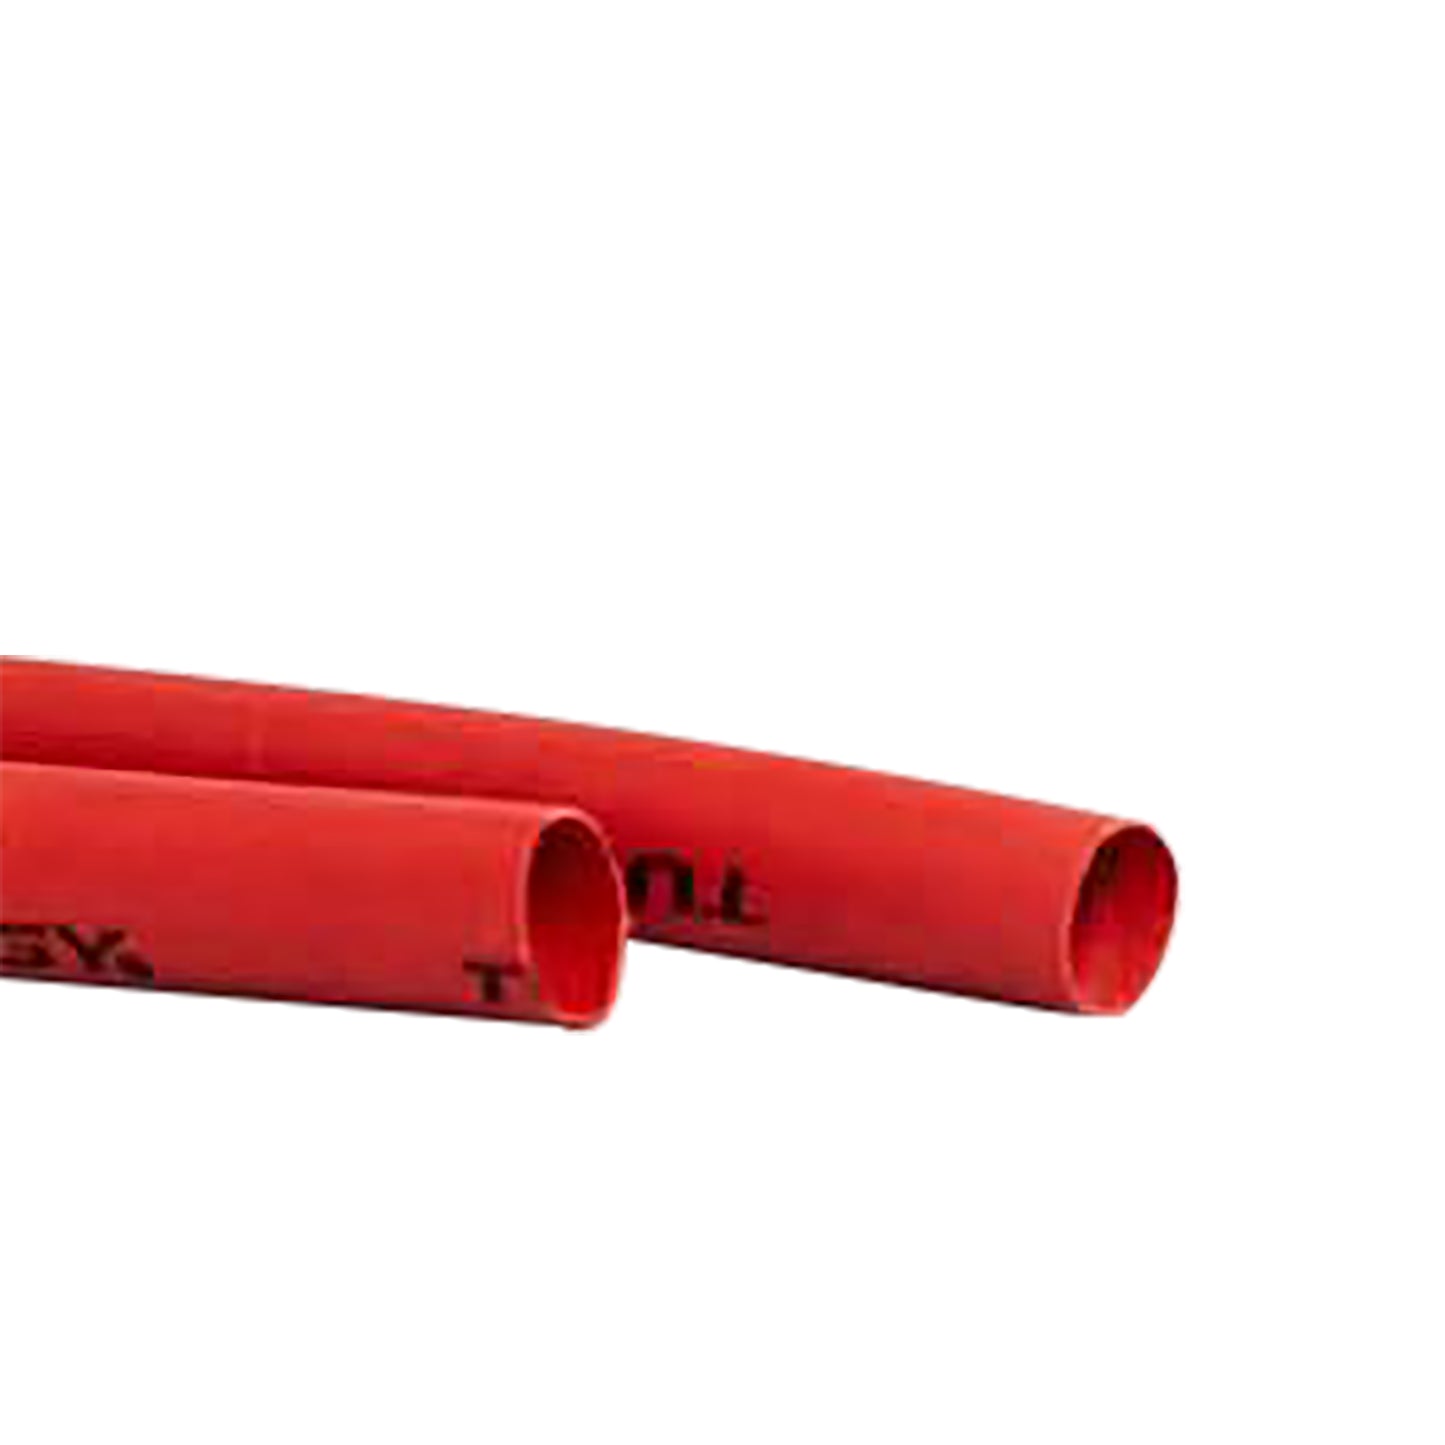 Flexible Thin Single Wall Non-Adhesive Heat Shrink Tubing 2:1 Red 3/8" ID - 100' Ft Spool